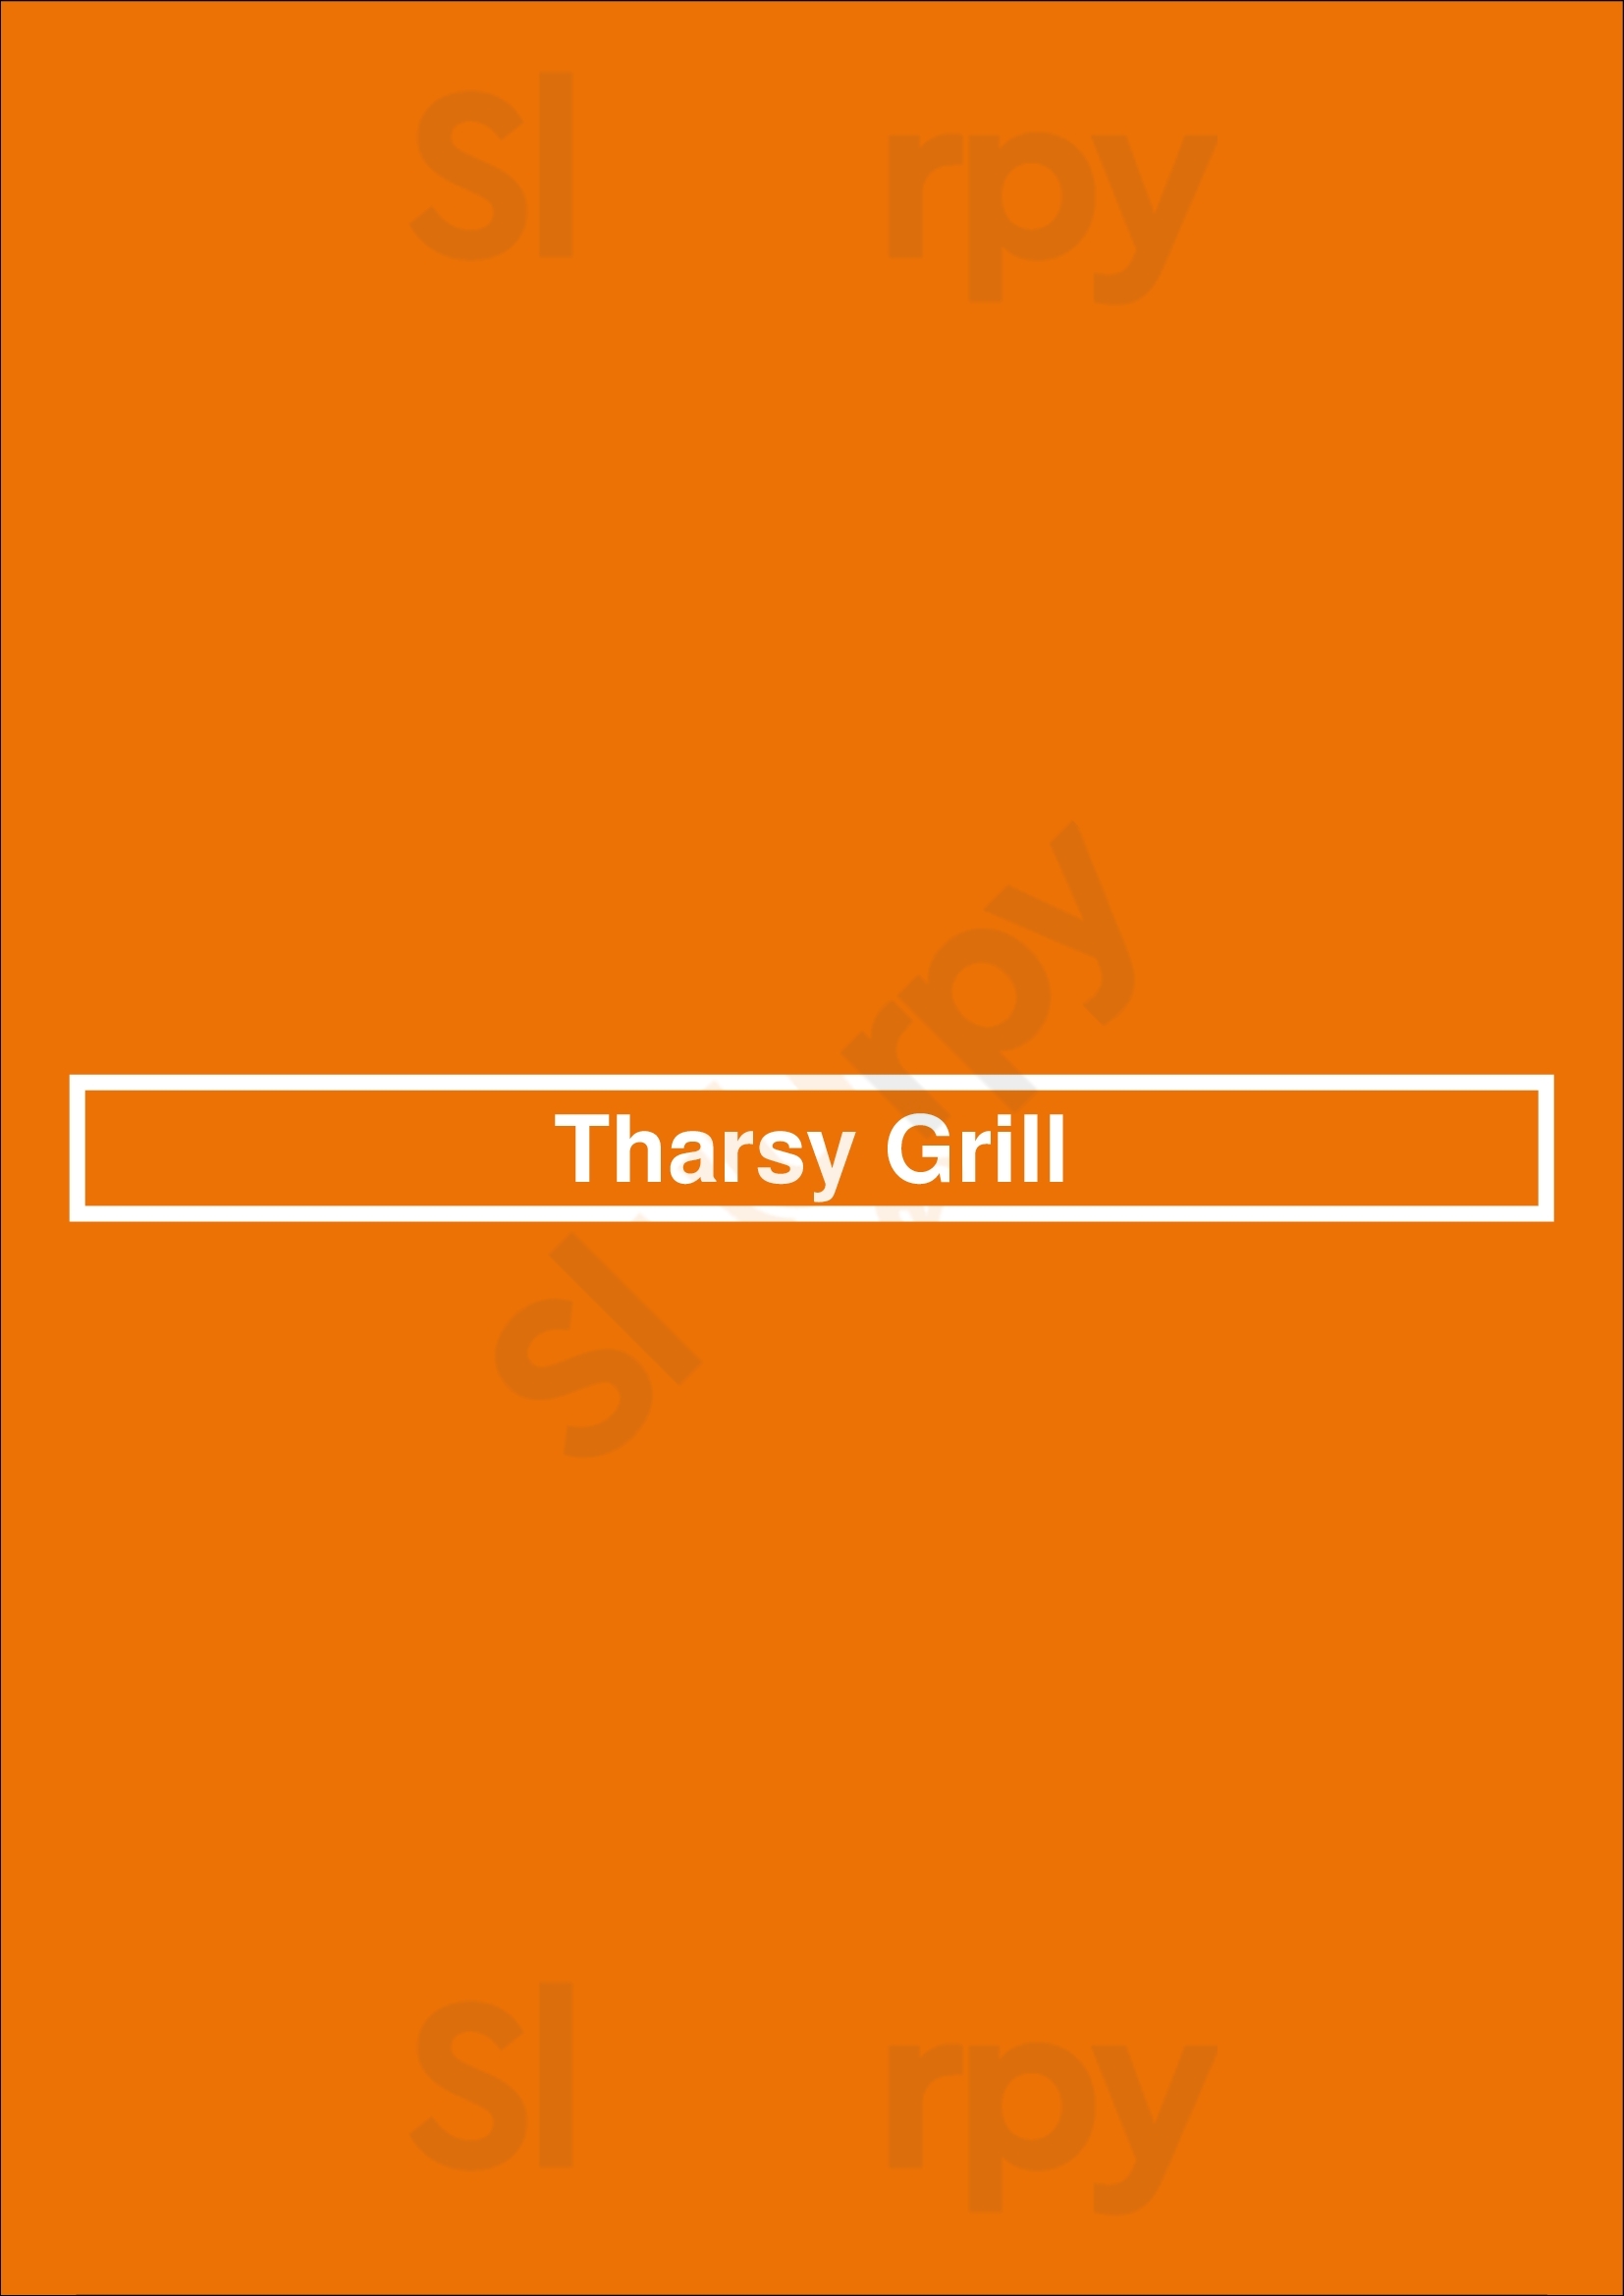 Tharsy Grill Baltimore Menu - 1